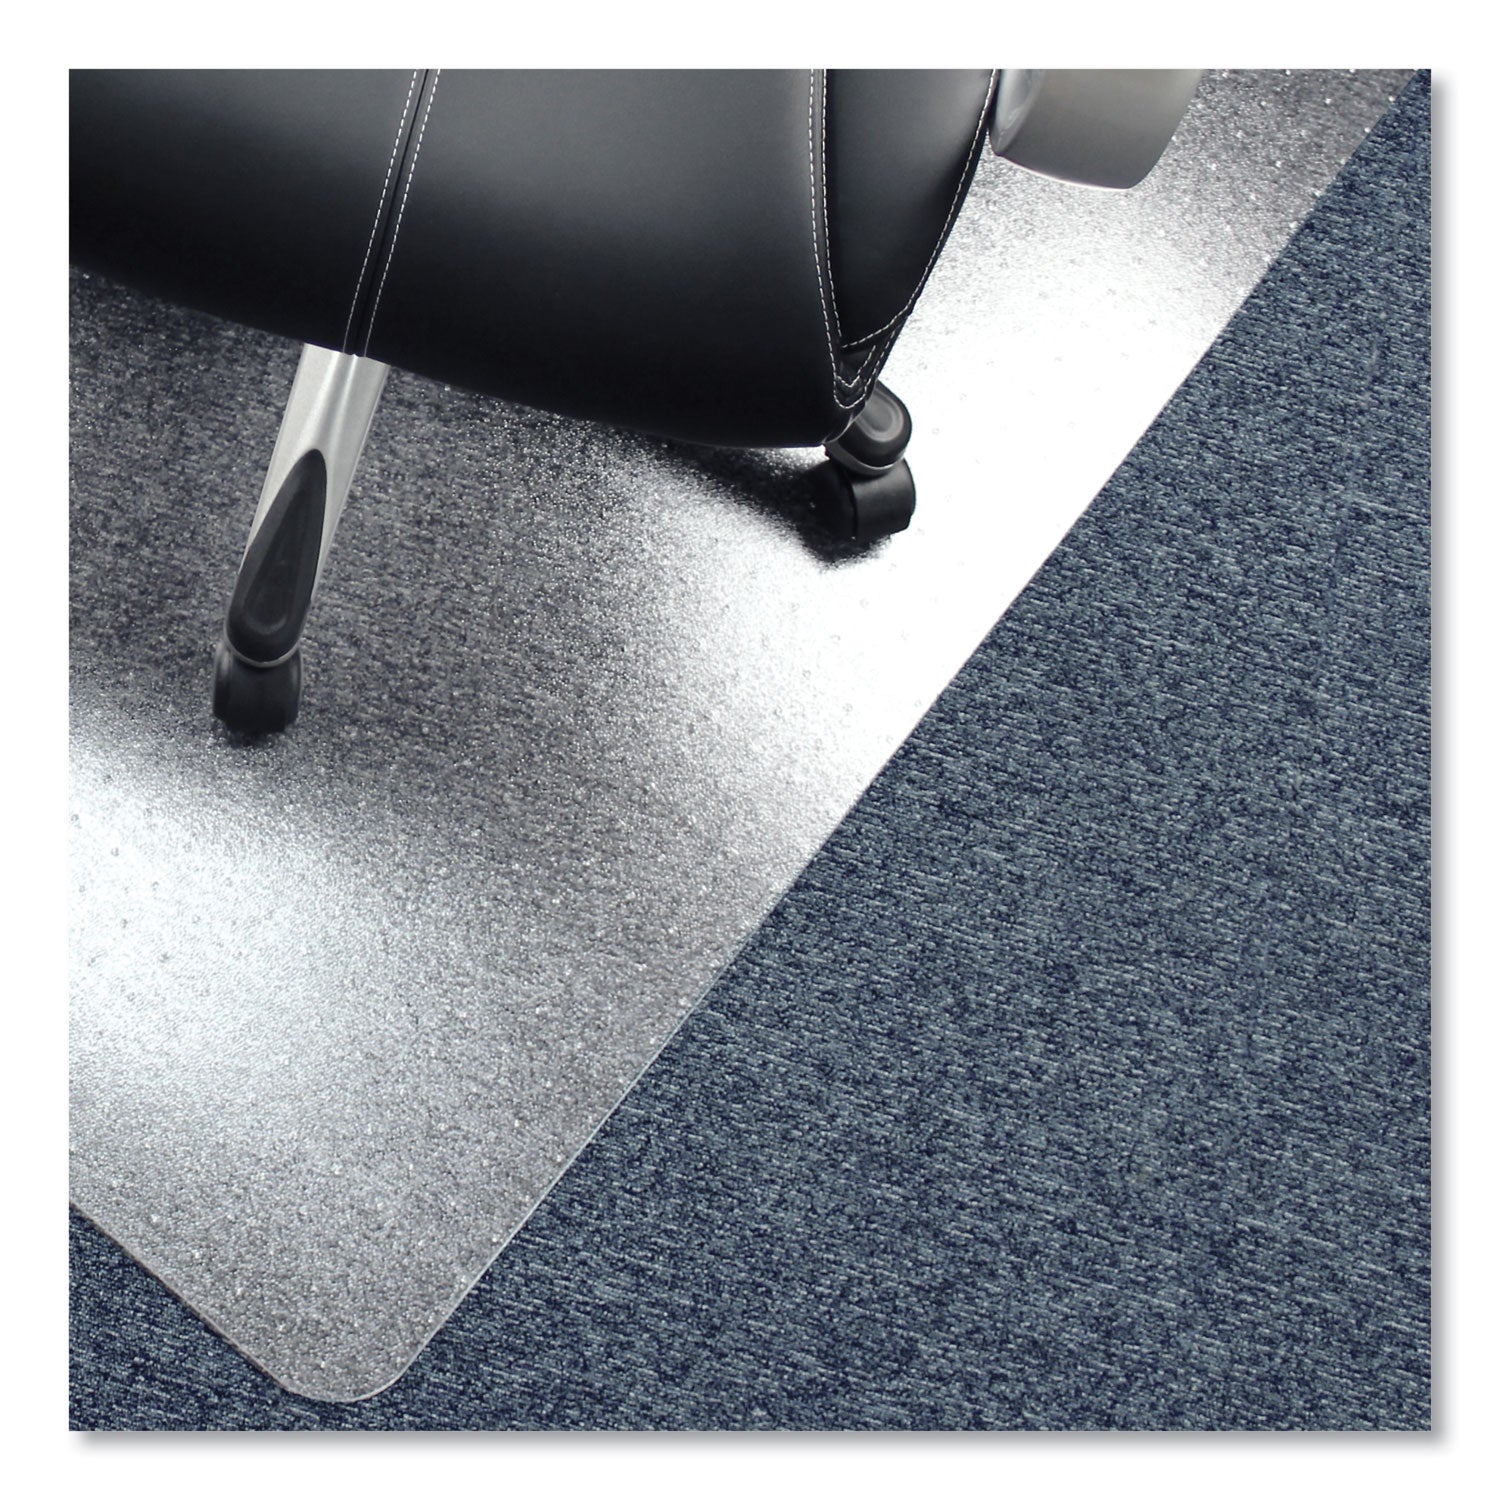 Cleartex Advantagemat Phthalate Free PVC Chair Mat for Low Pile Carpet, 53 x 45, Clear - 